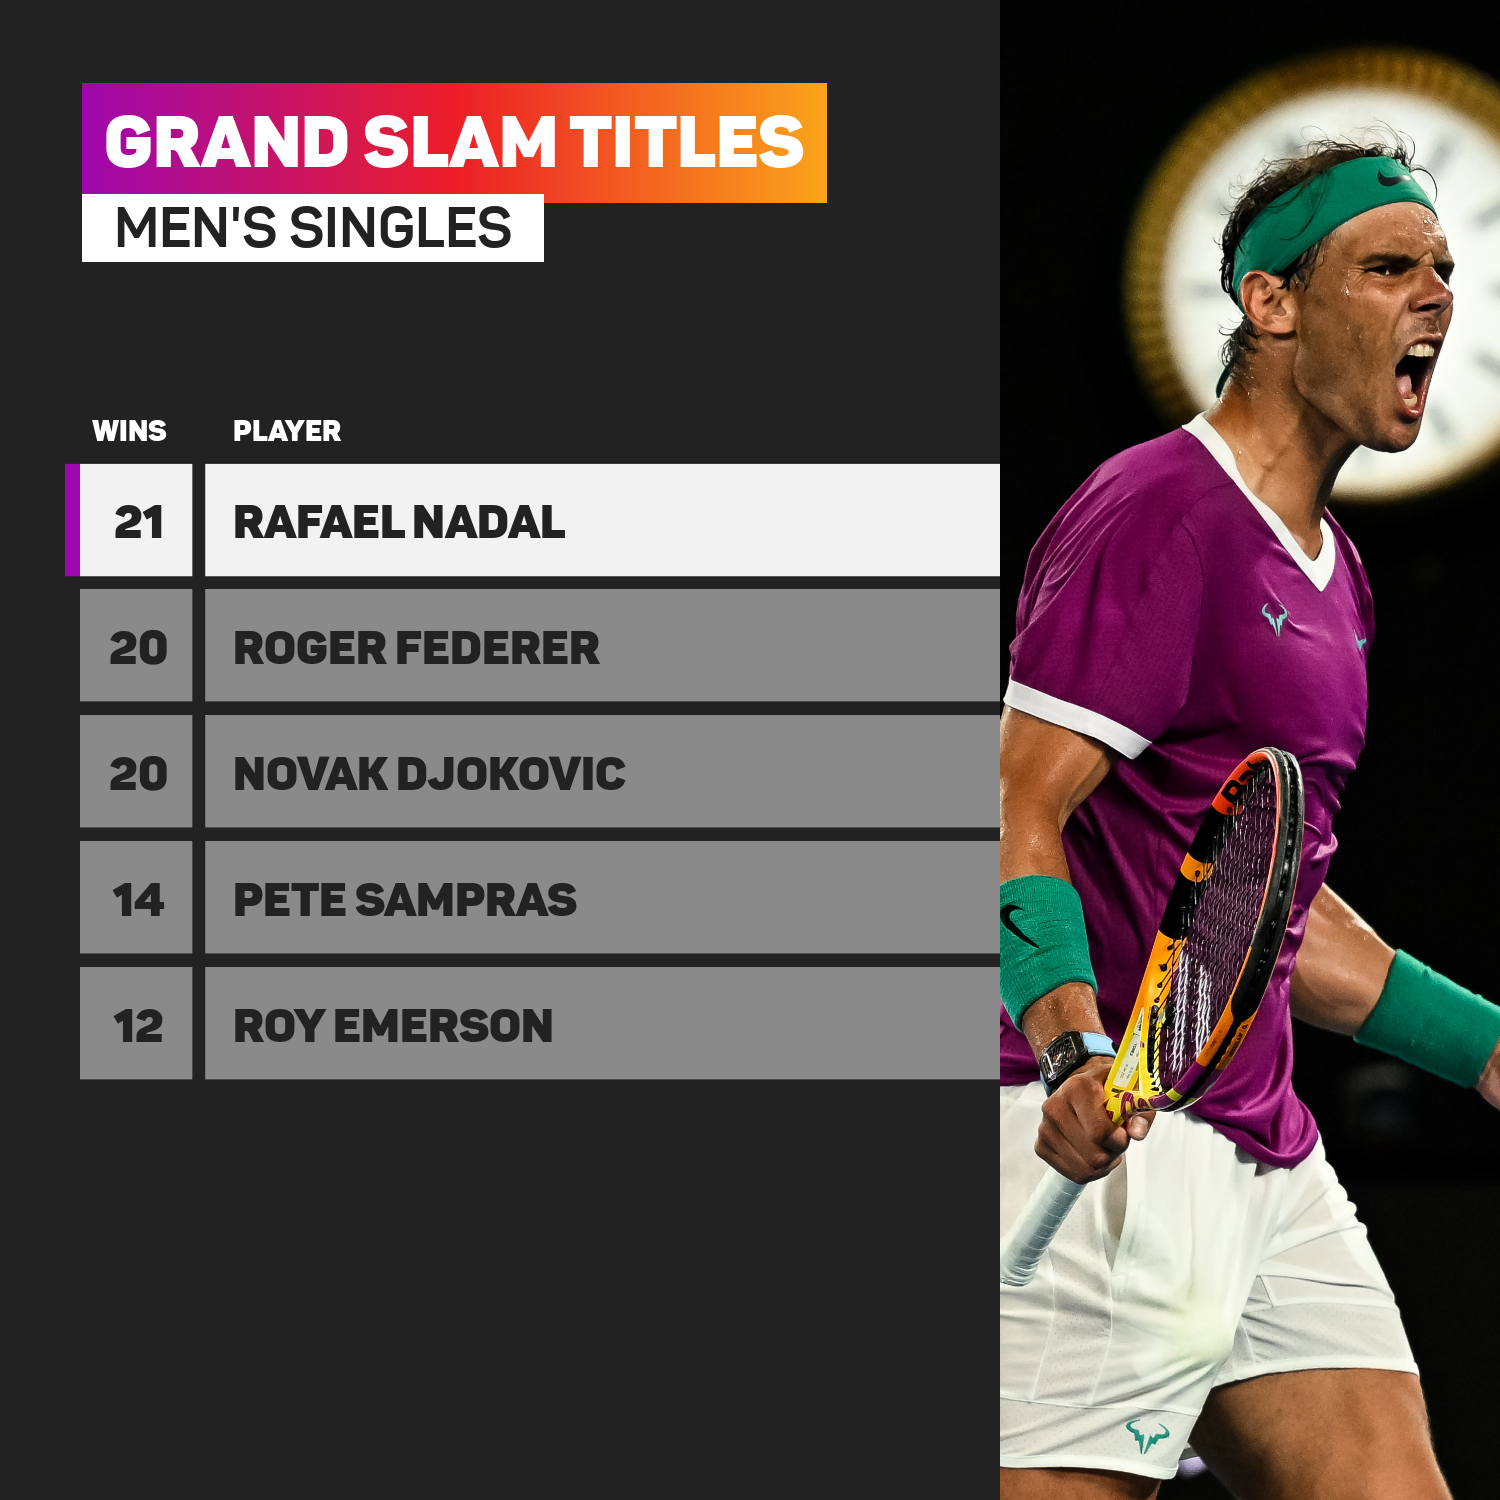 Rafael Nadal has won a record 21 grand slam titles